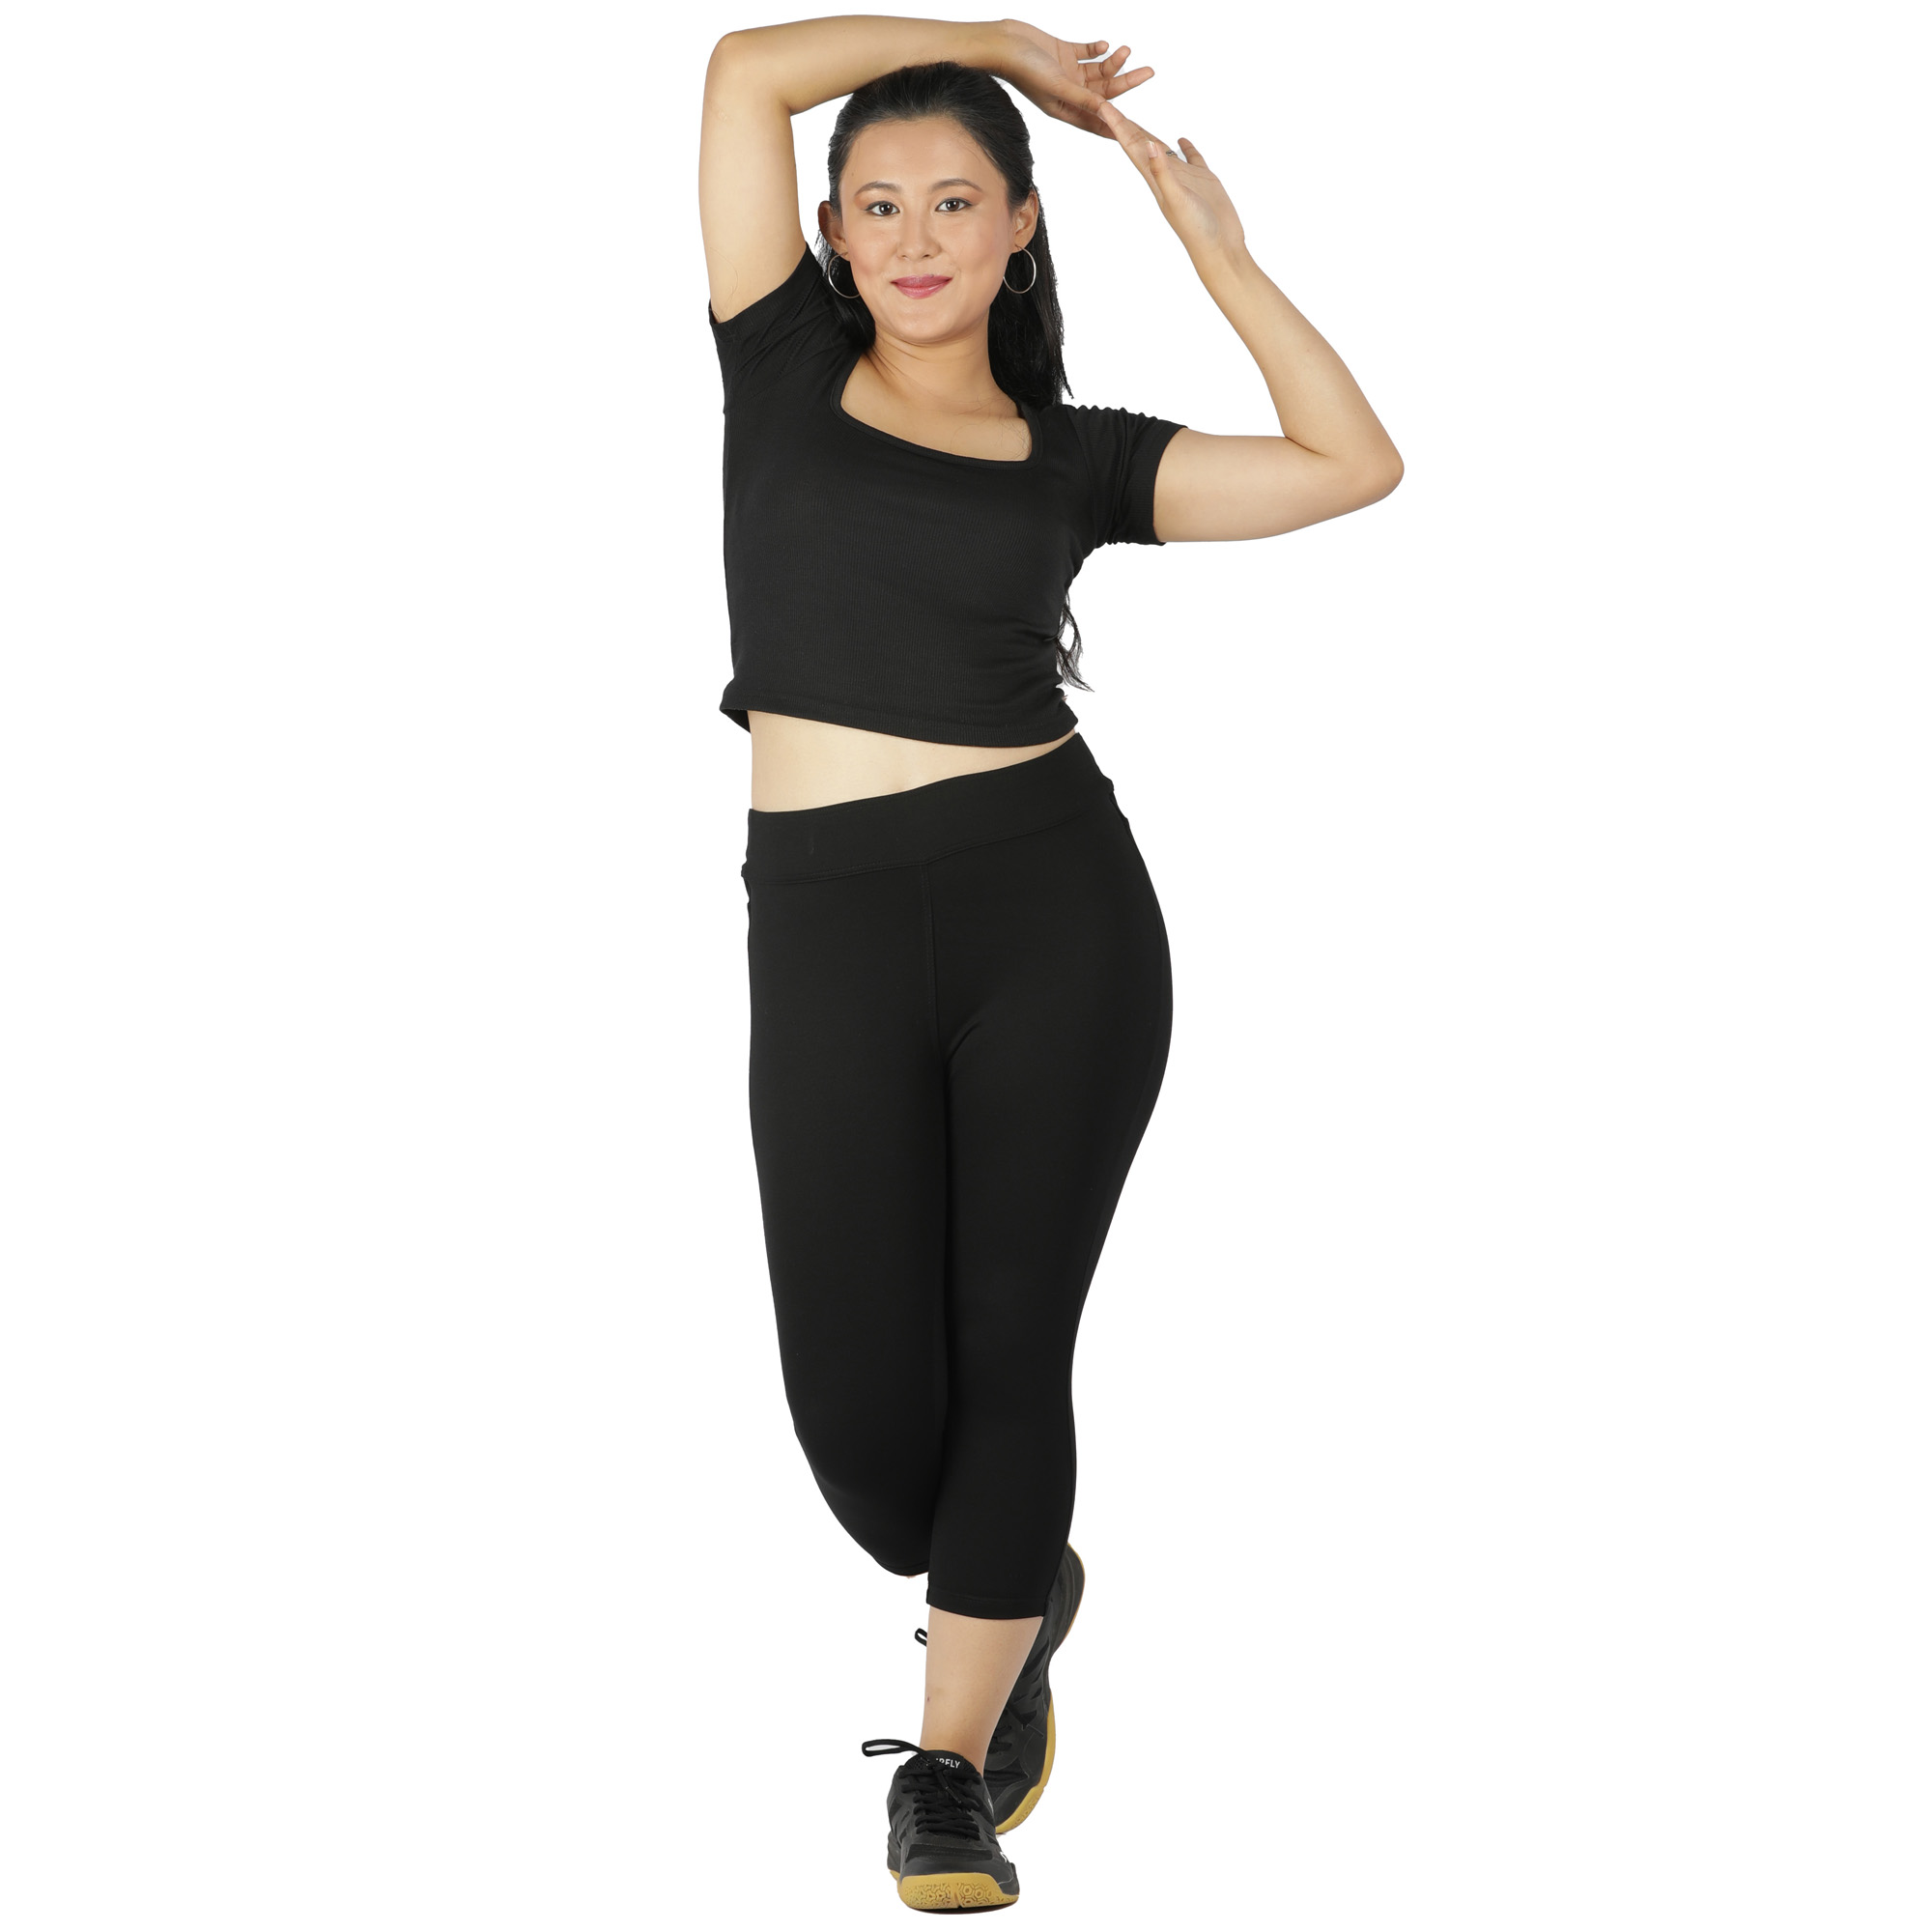 Black capris for women gym wear Low rise - Belore Slims